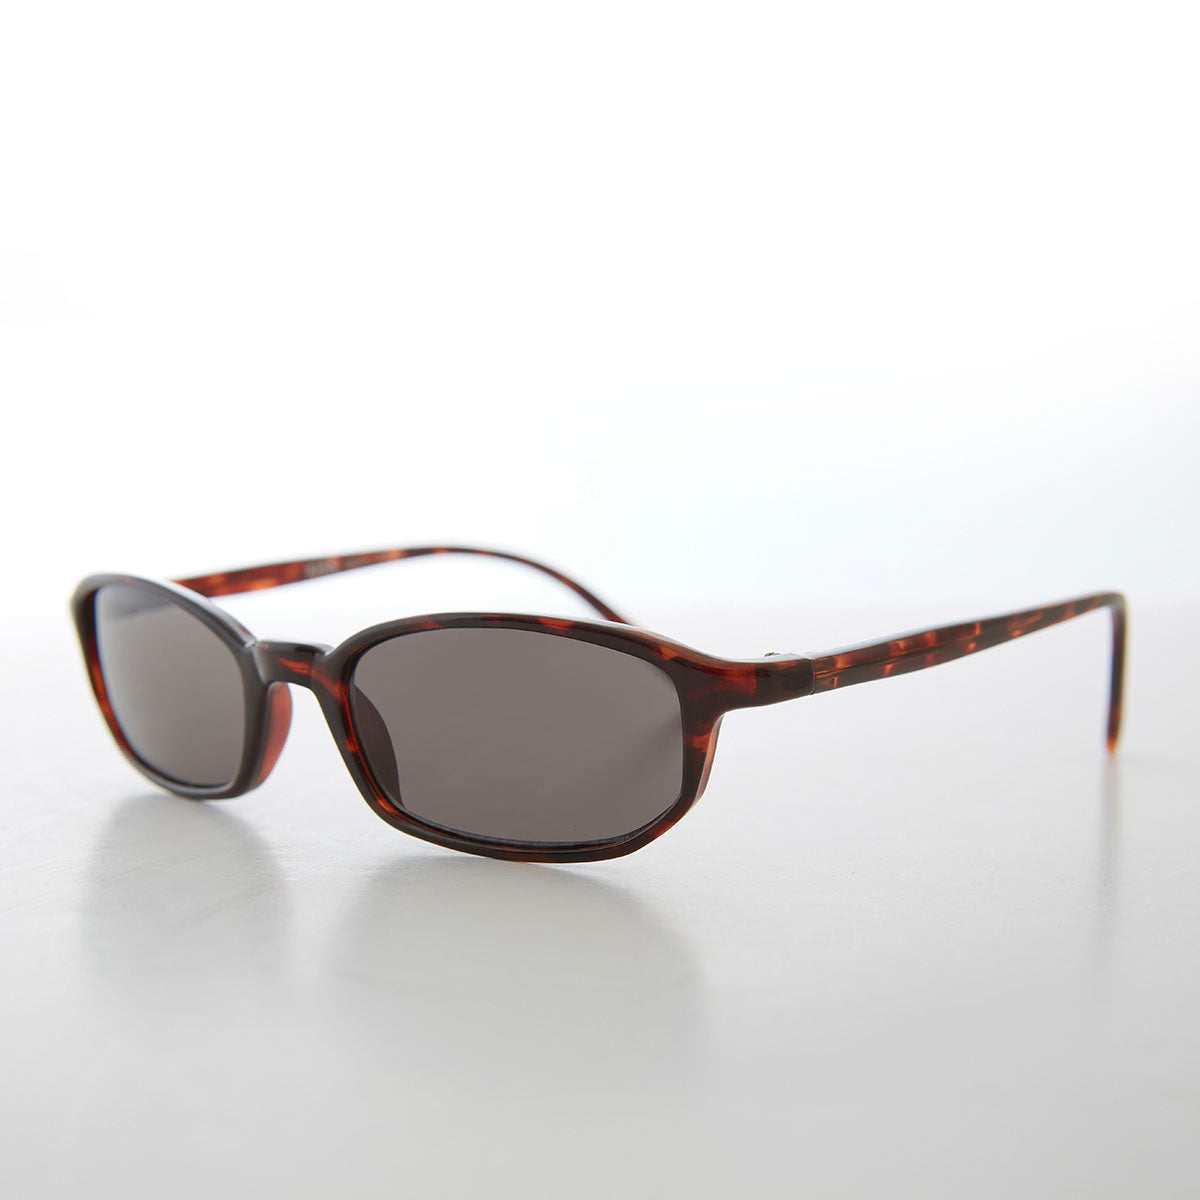 small rectangle tortoise frame sunglasses with gray lenses